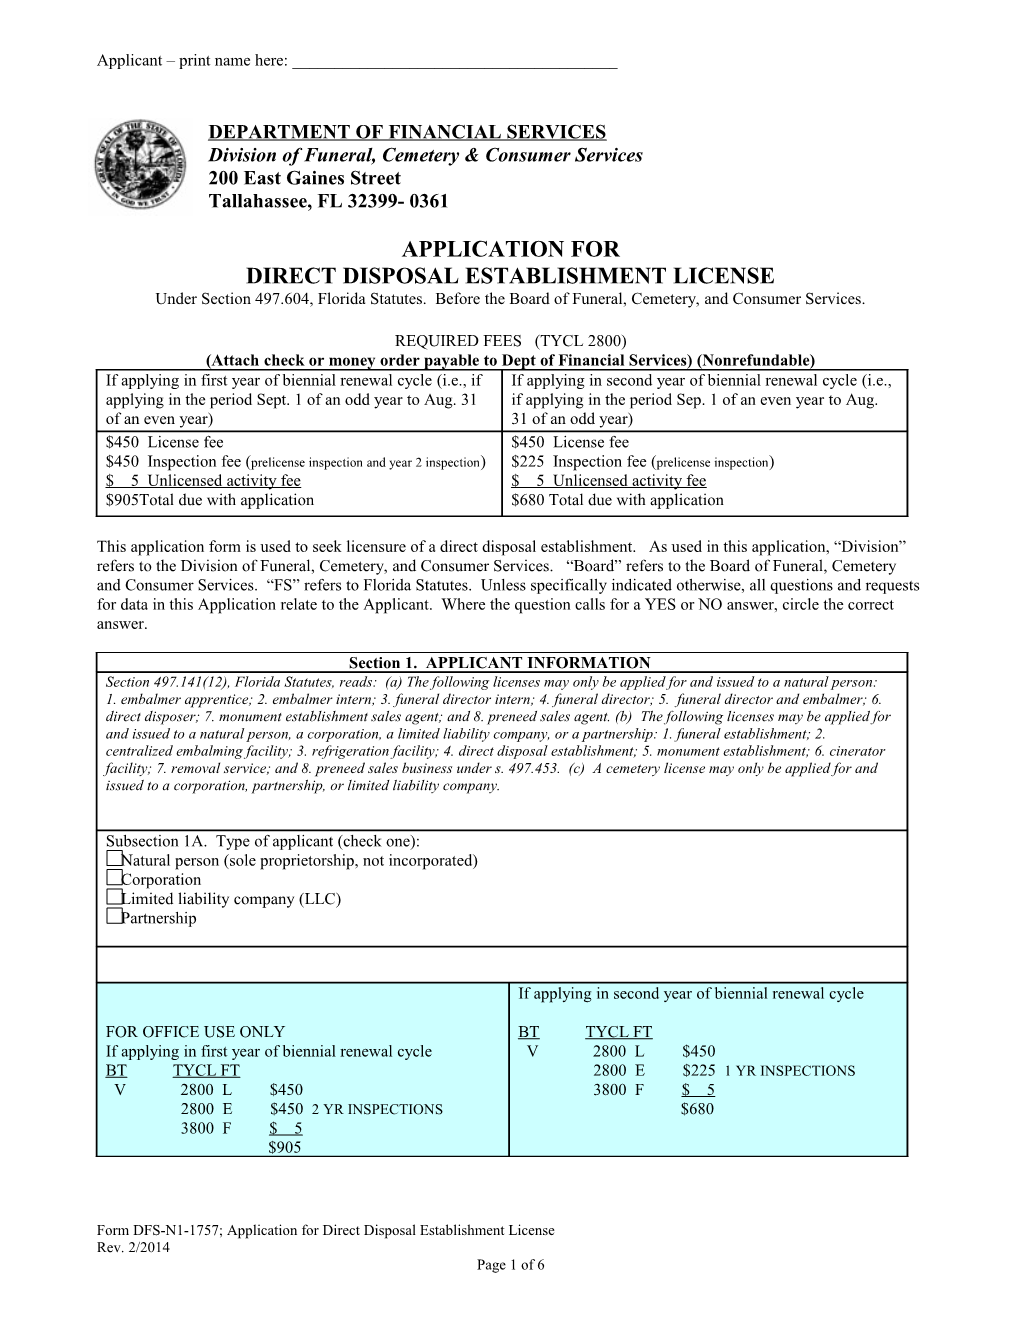 Application for Direct Disposal Establishment License